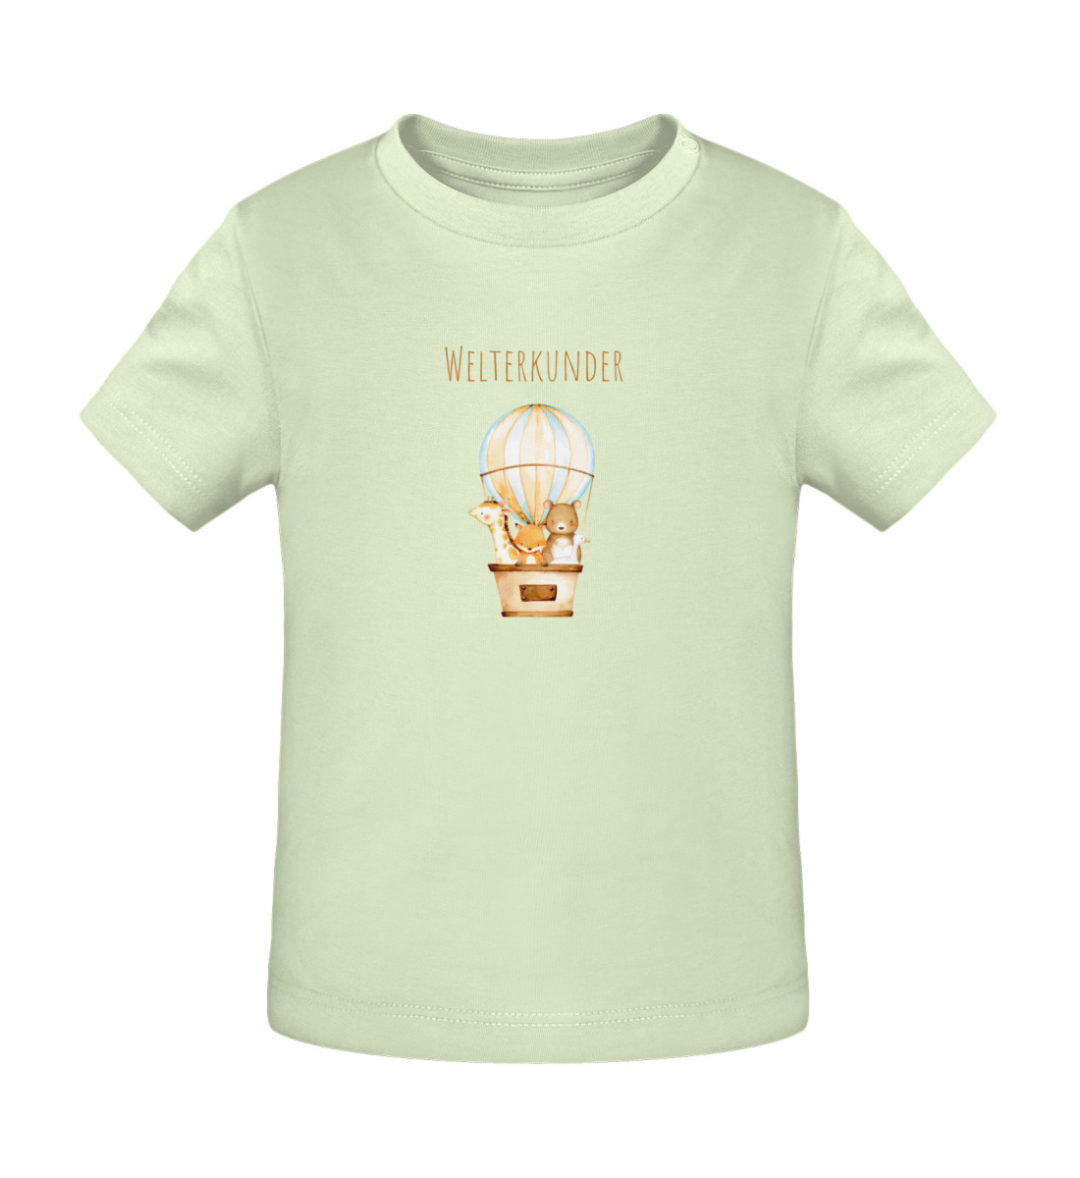 Welterkunder - Baby Creator T-Shirt ST/ST-7105